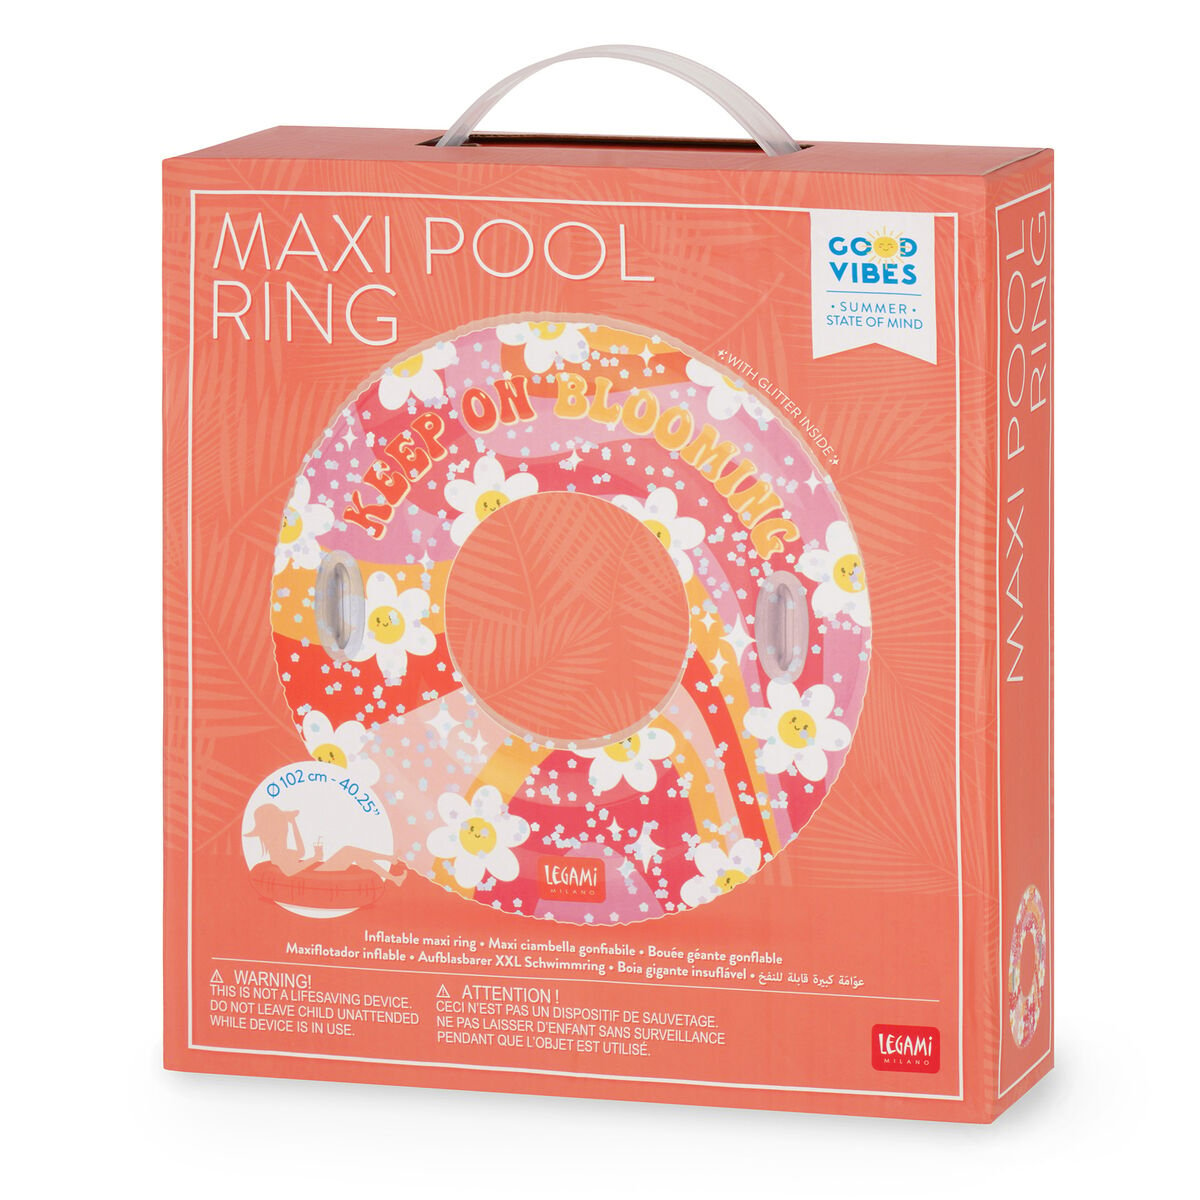 Maxiflotador Inflable para la Piscina - Maxi Pool Ring, , zoo